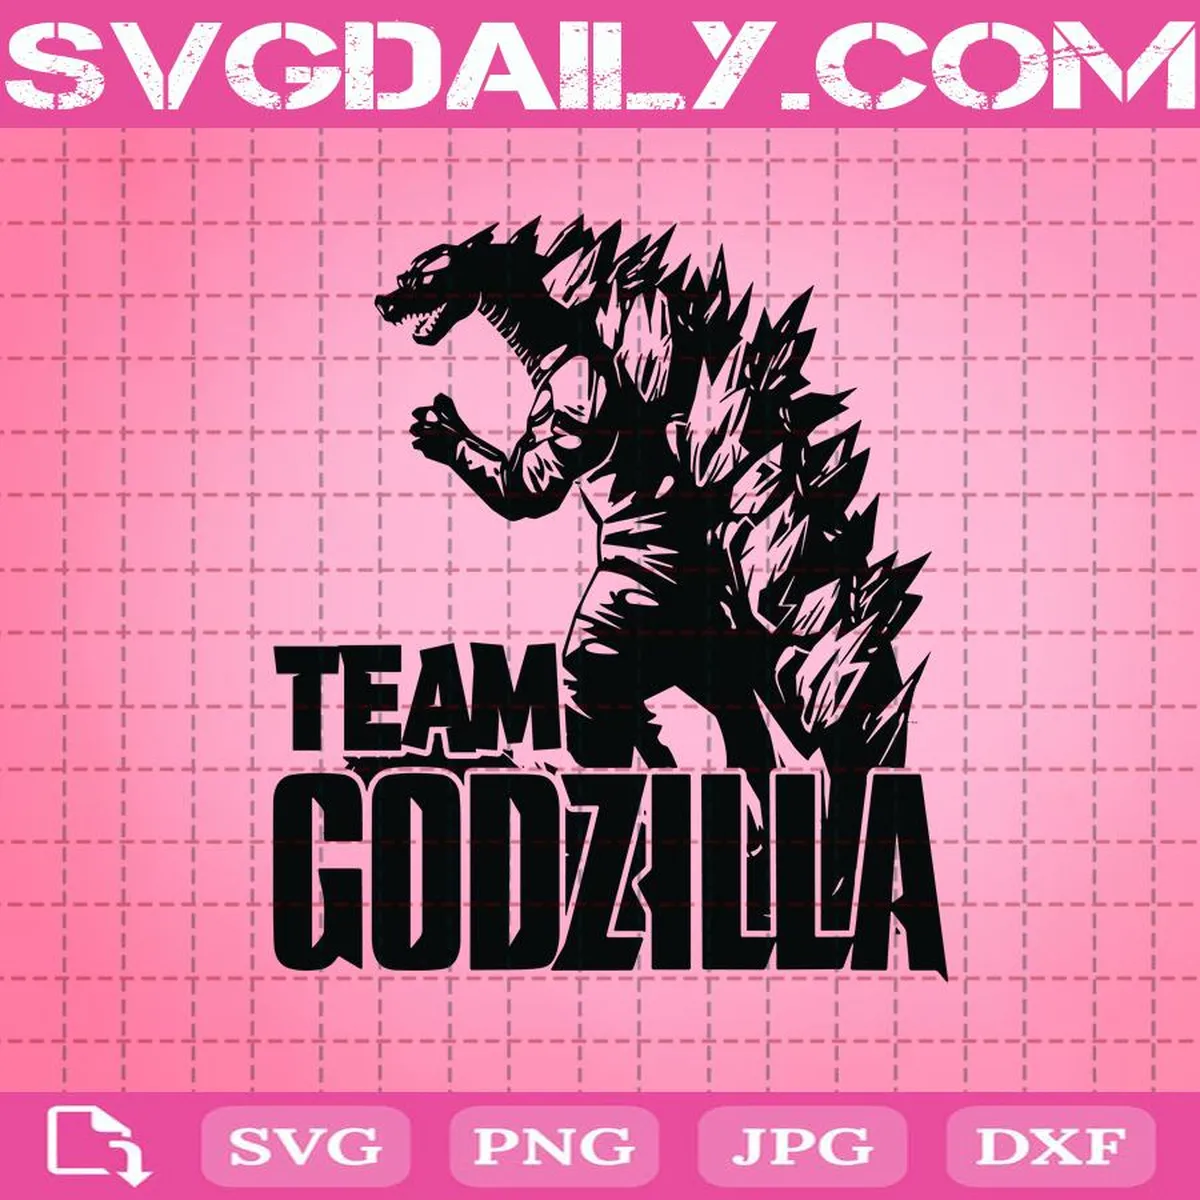 Team Godzilla Svg, Godzilla Neon Svg, Godzilla & Kong Svg, 2021 King Of Monsters Svg, Svg Png Dxf Eps AI Instant Download